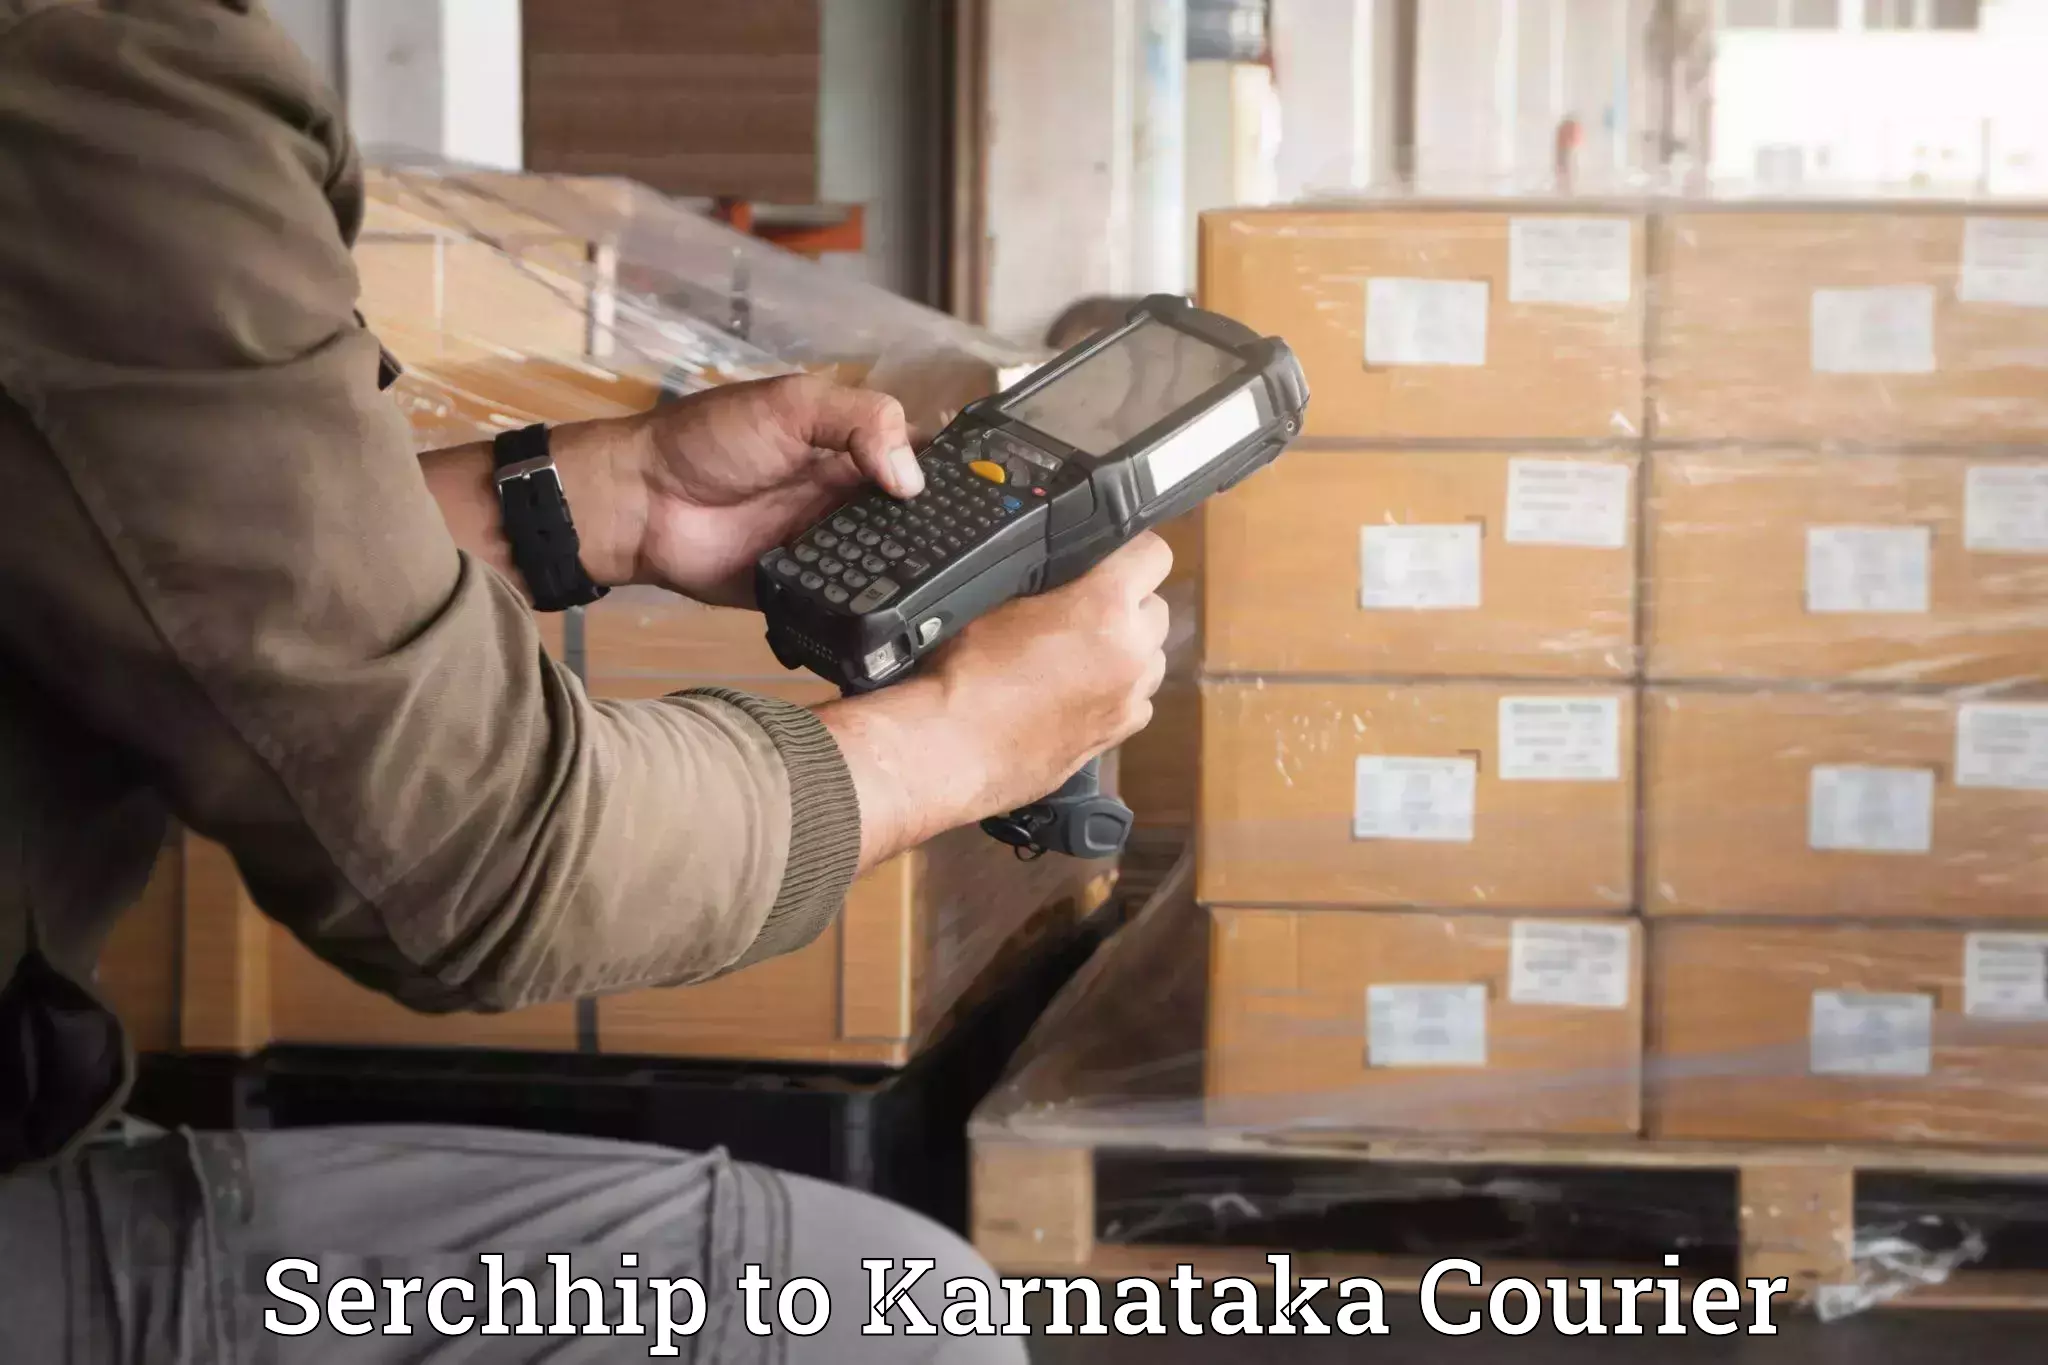 Efficient moving company Serchhip to Karnataka